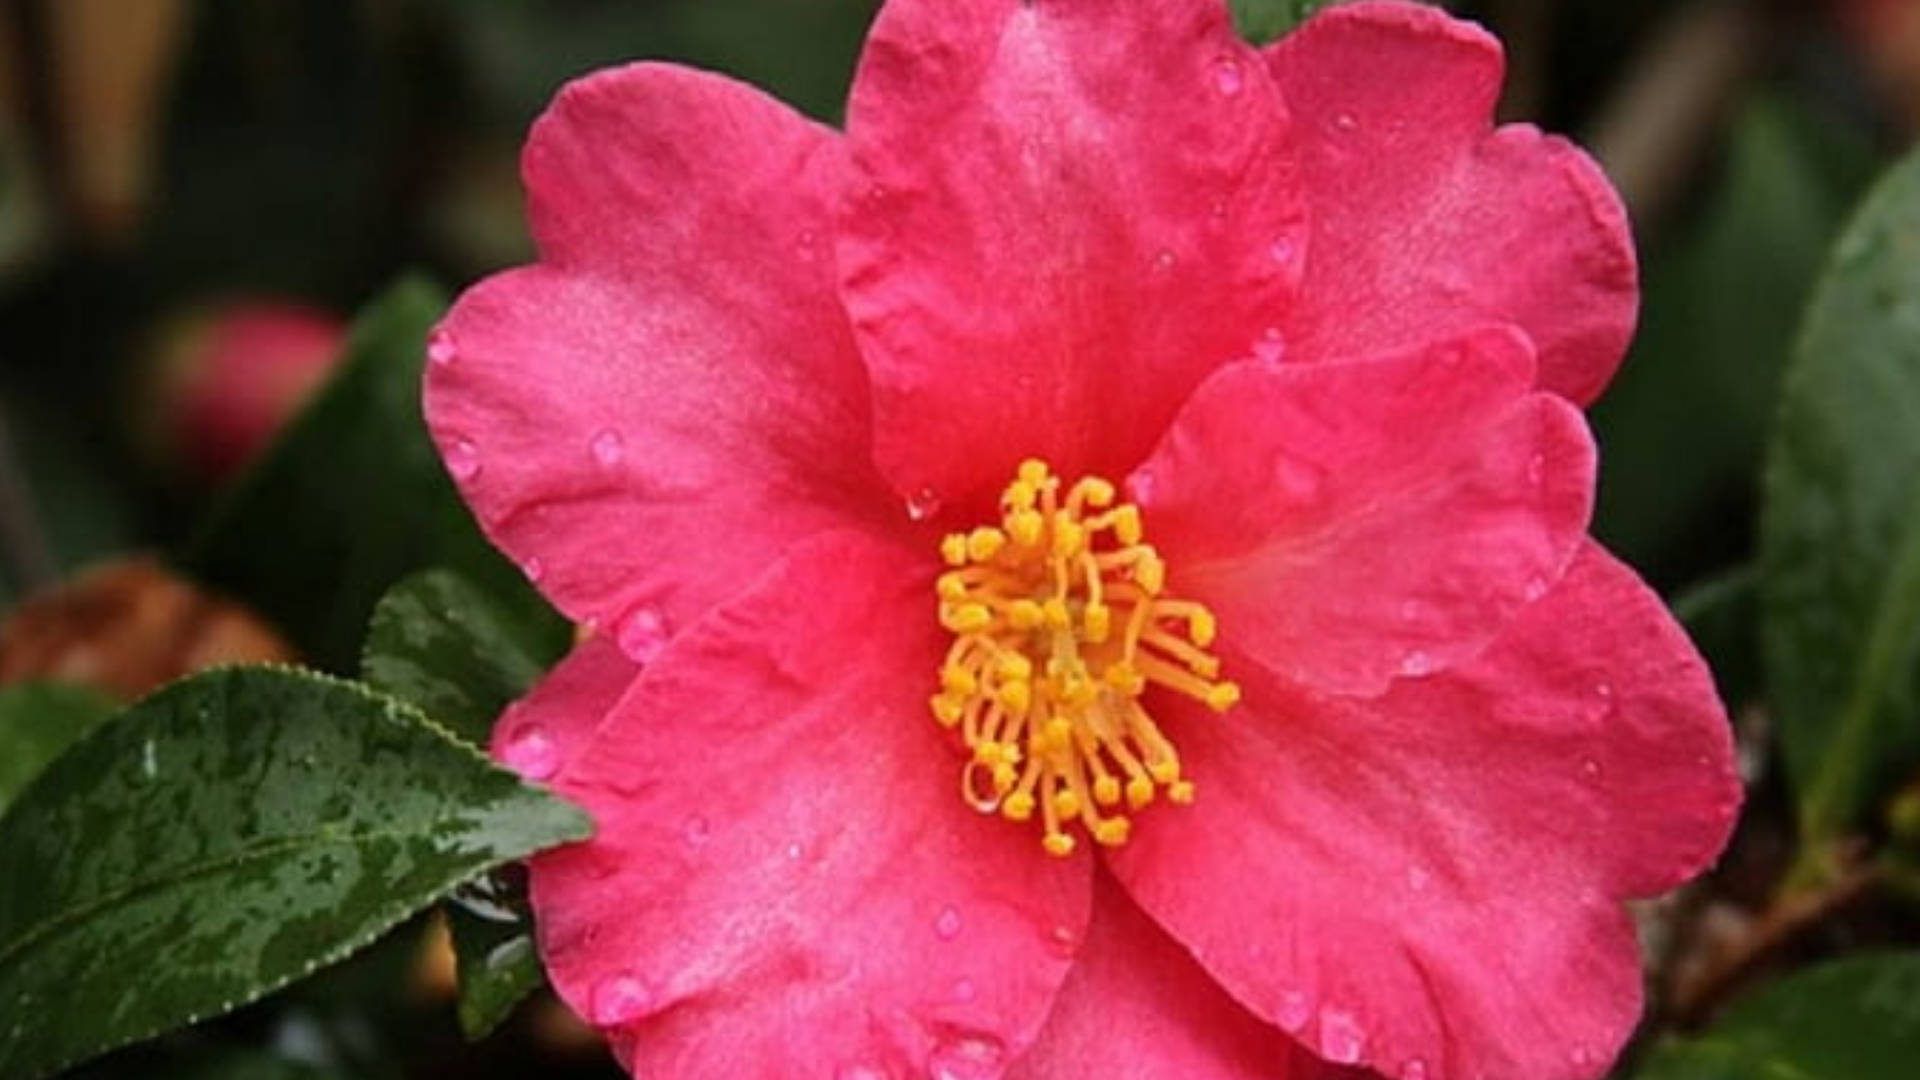 Stunning Blossom Of Camellia Sasanqua